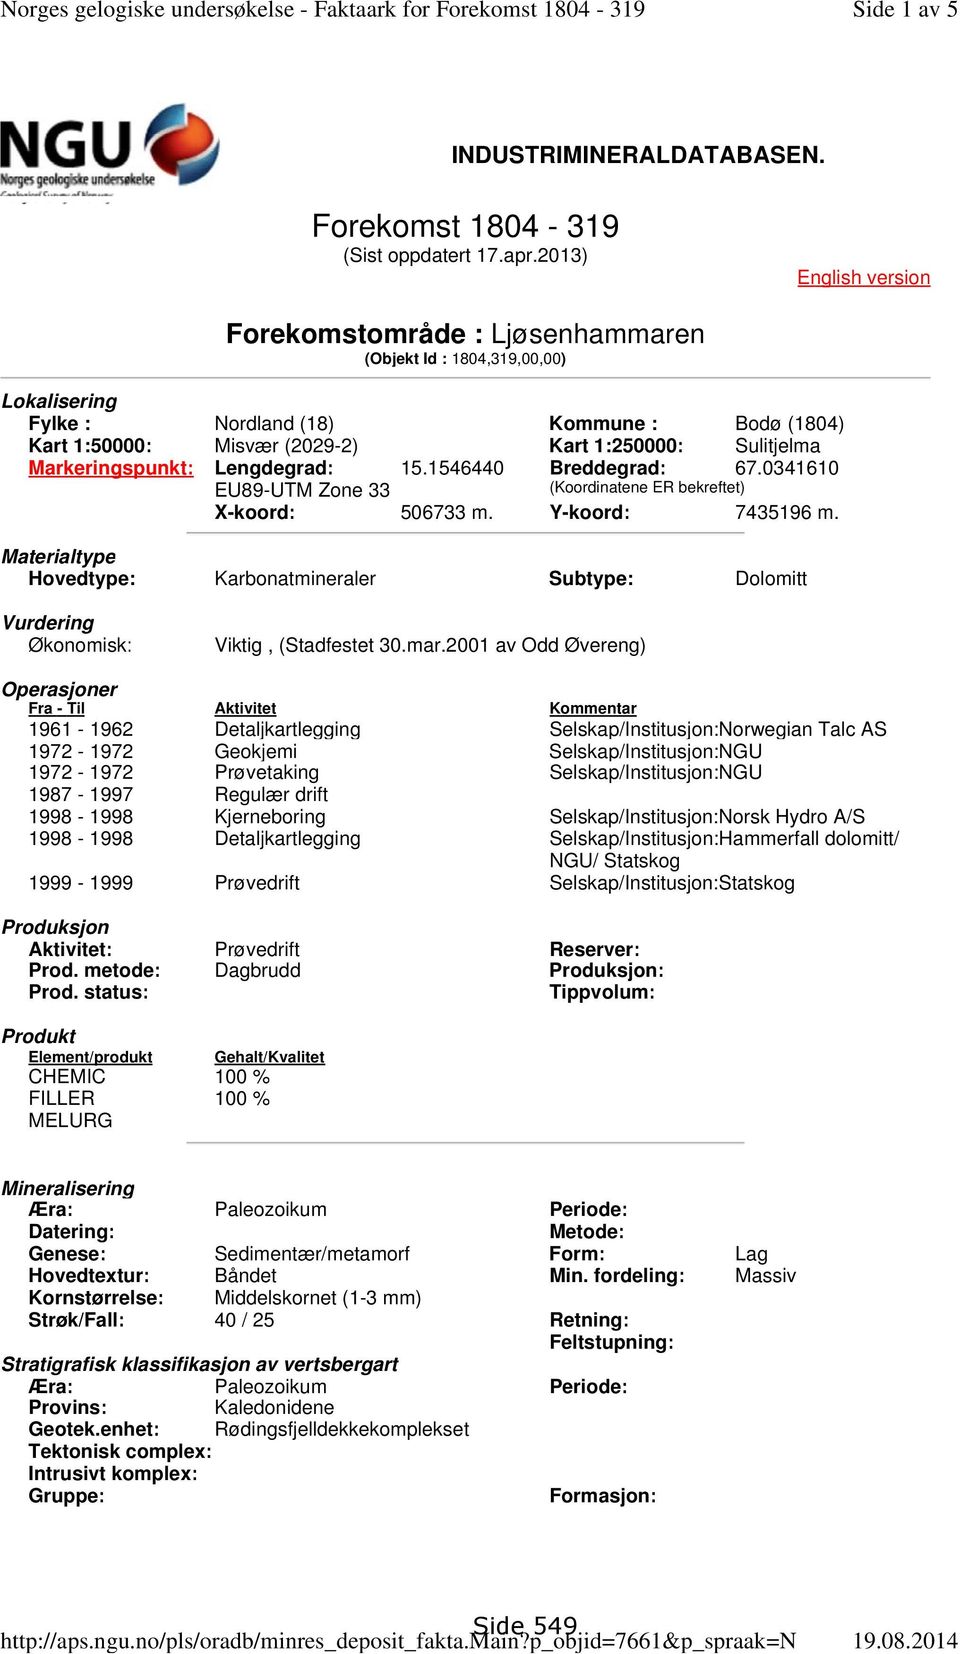 2013) English version Forekomstområde : Ljøsenhammaren (Objekt Id : 1804,319,00,00) Lokalisering Fylke : Nordland (18) Kommune : Bodø (1804) Kart 1:50000: Misvær (2029-2) Kart 1:250000: Sulitjelma